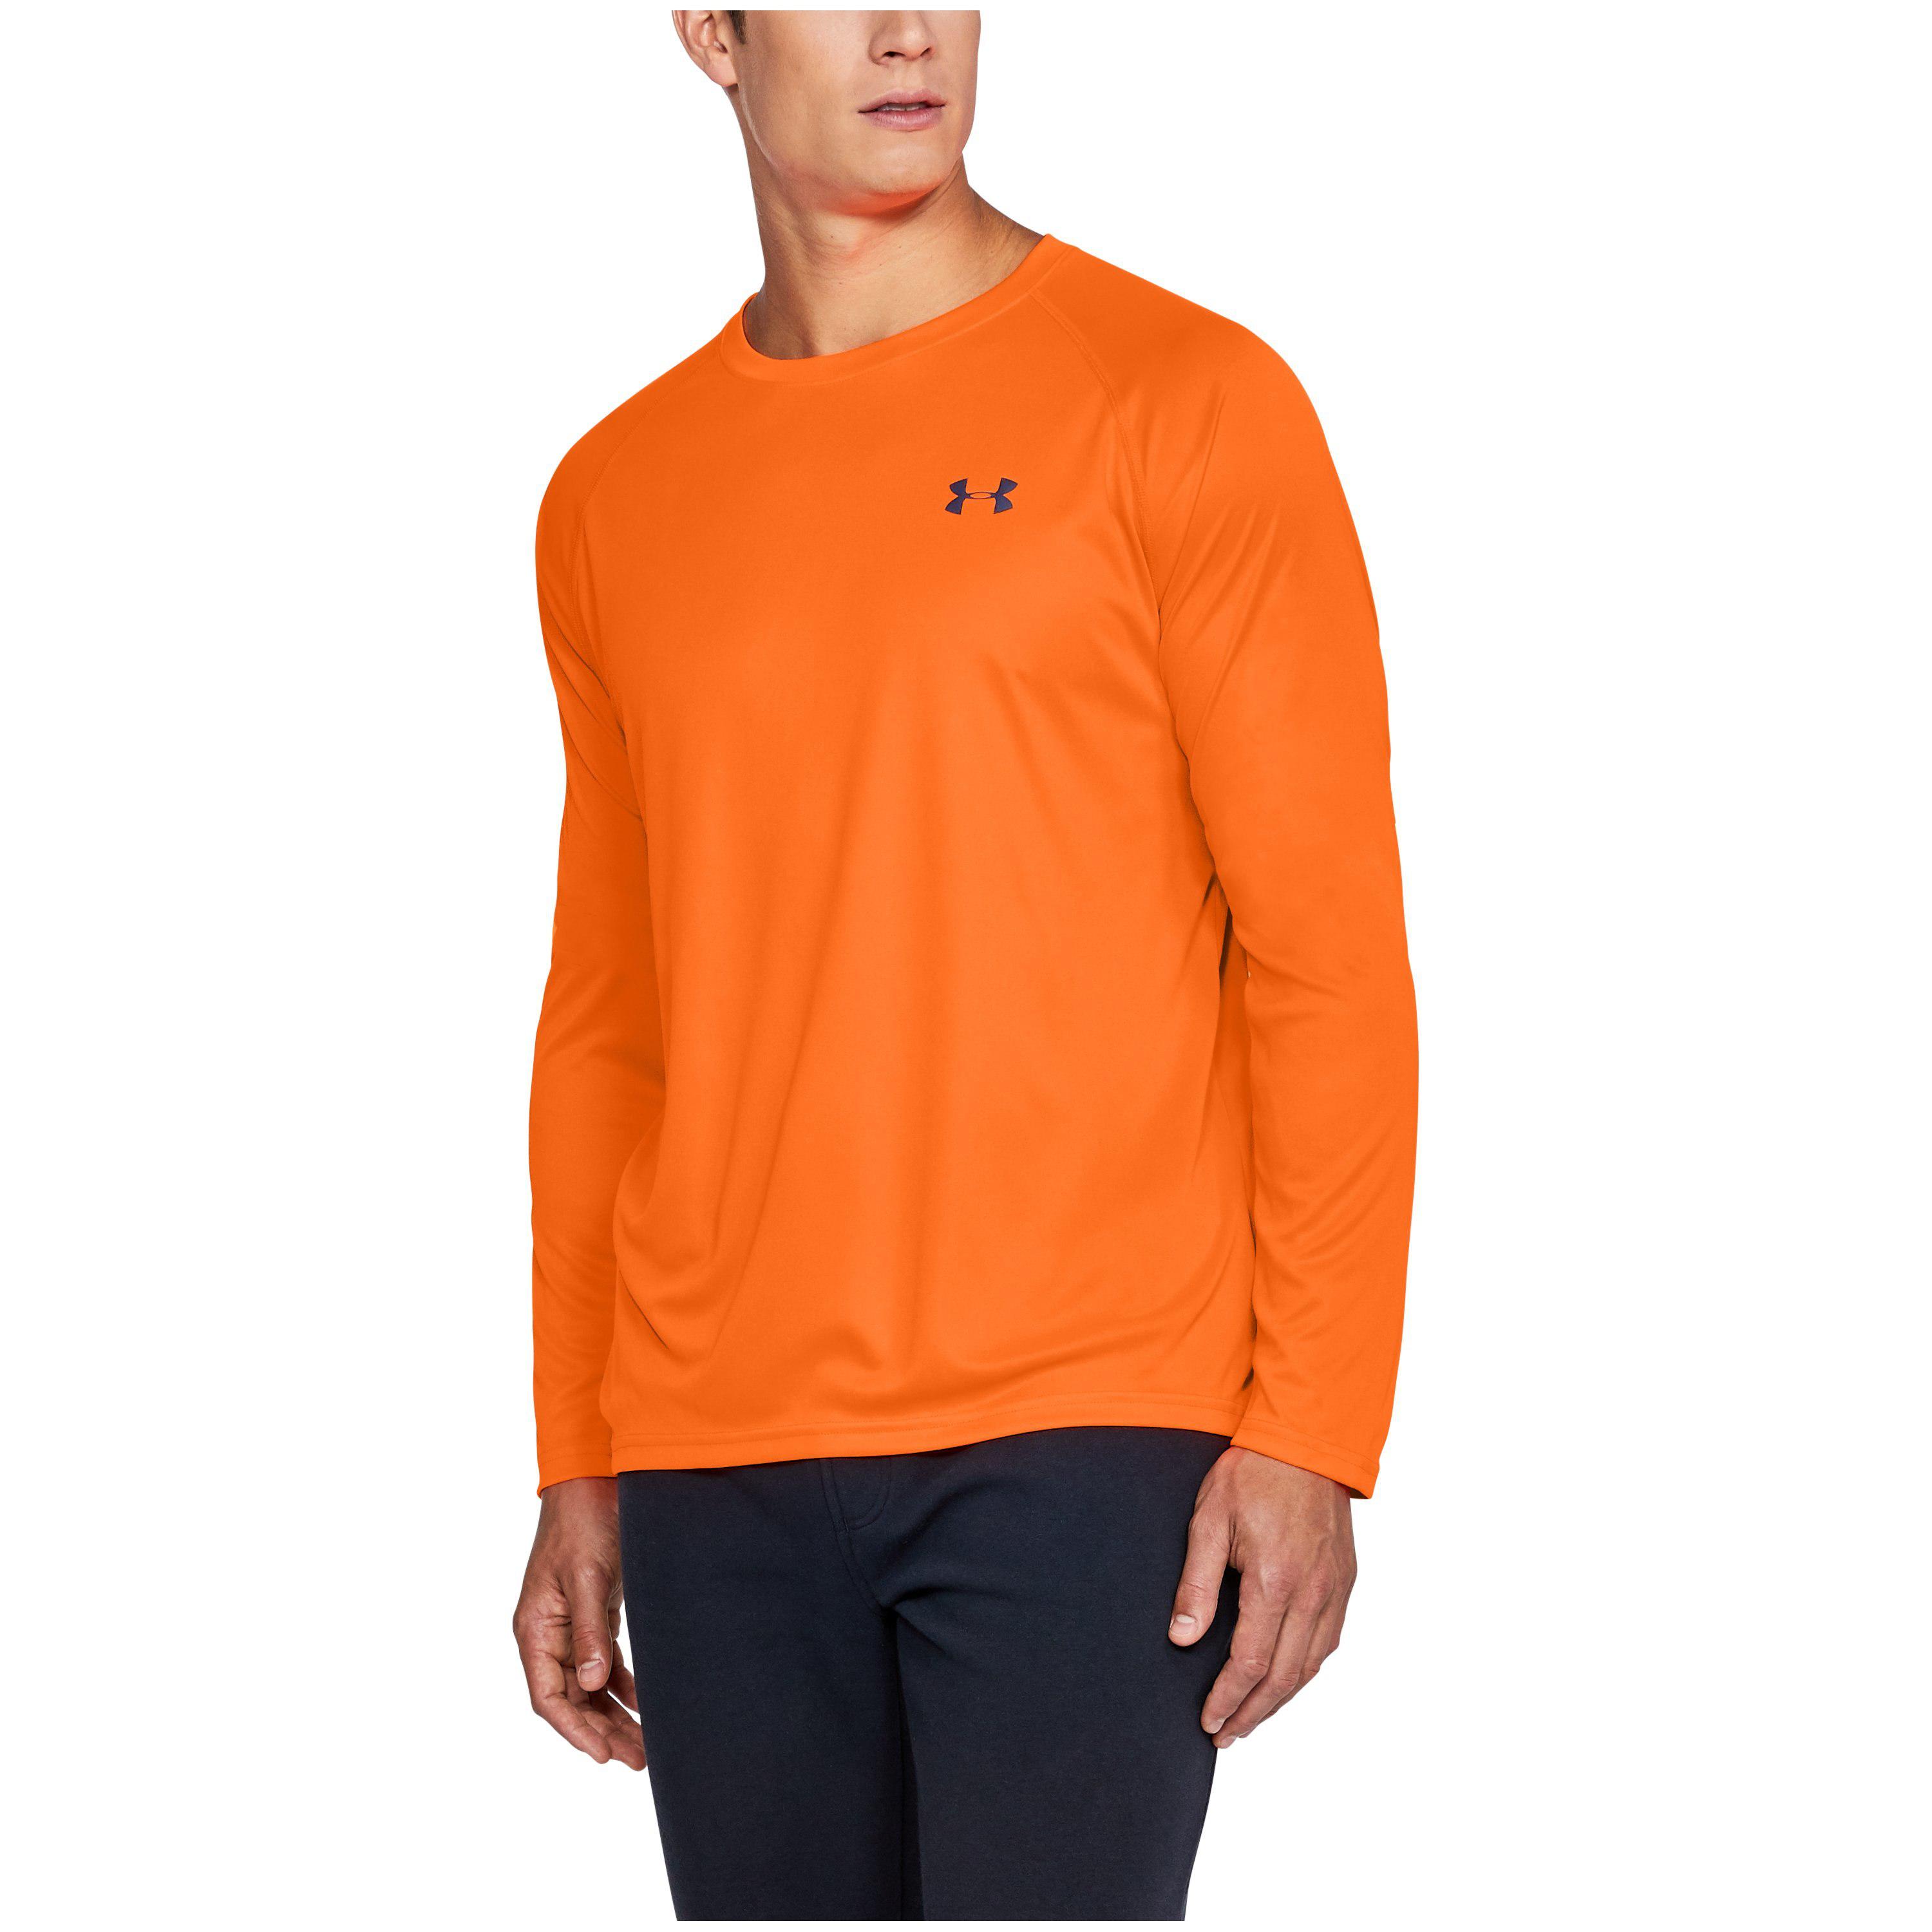 Under Armour - Tee Shirt Compression 1361683 Orange Fluo